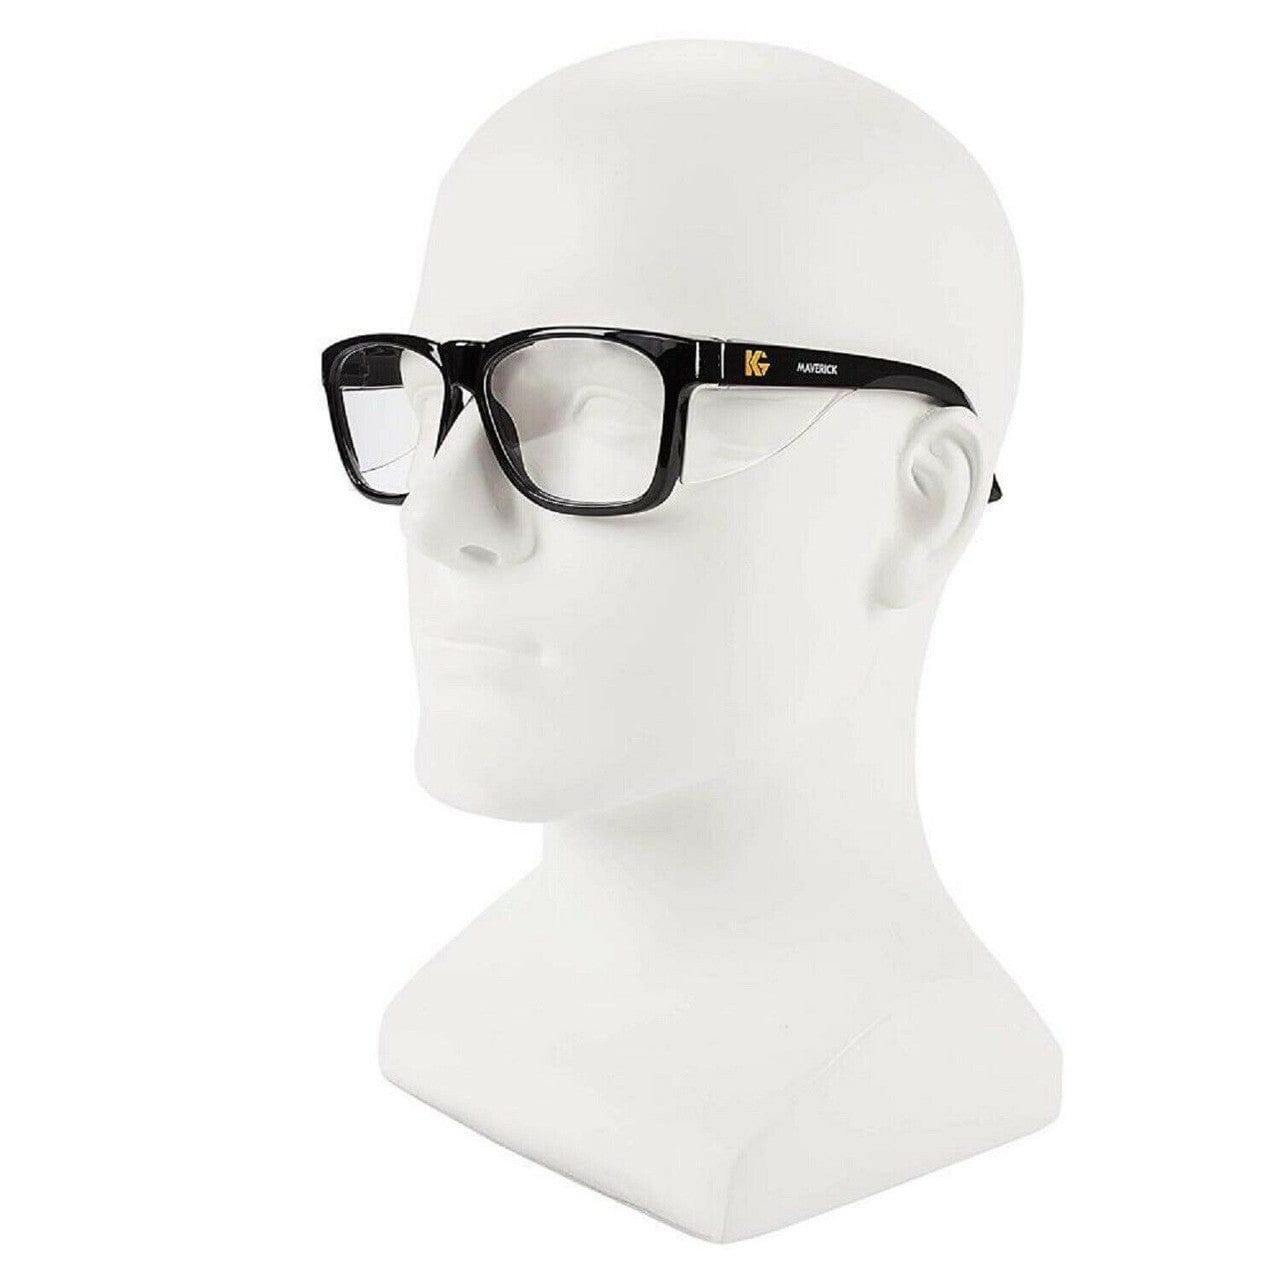 KleenGuard Maverick Safety Glasses Black Frame Clear Anti-Fog Lens 49309 Modeled